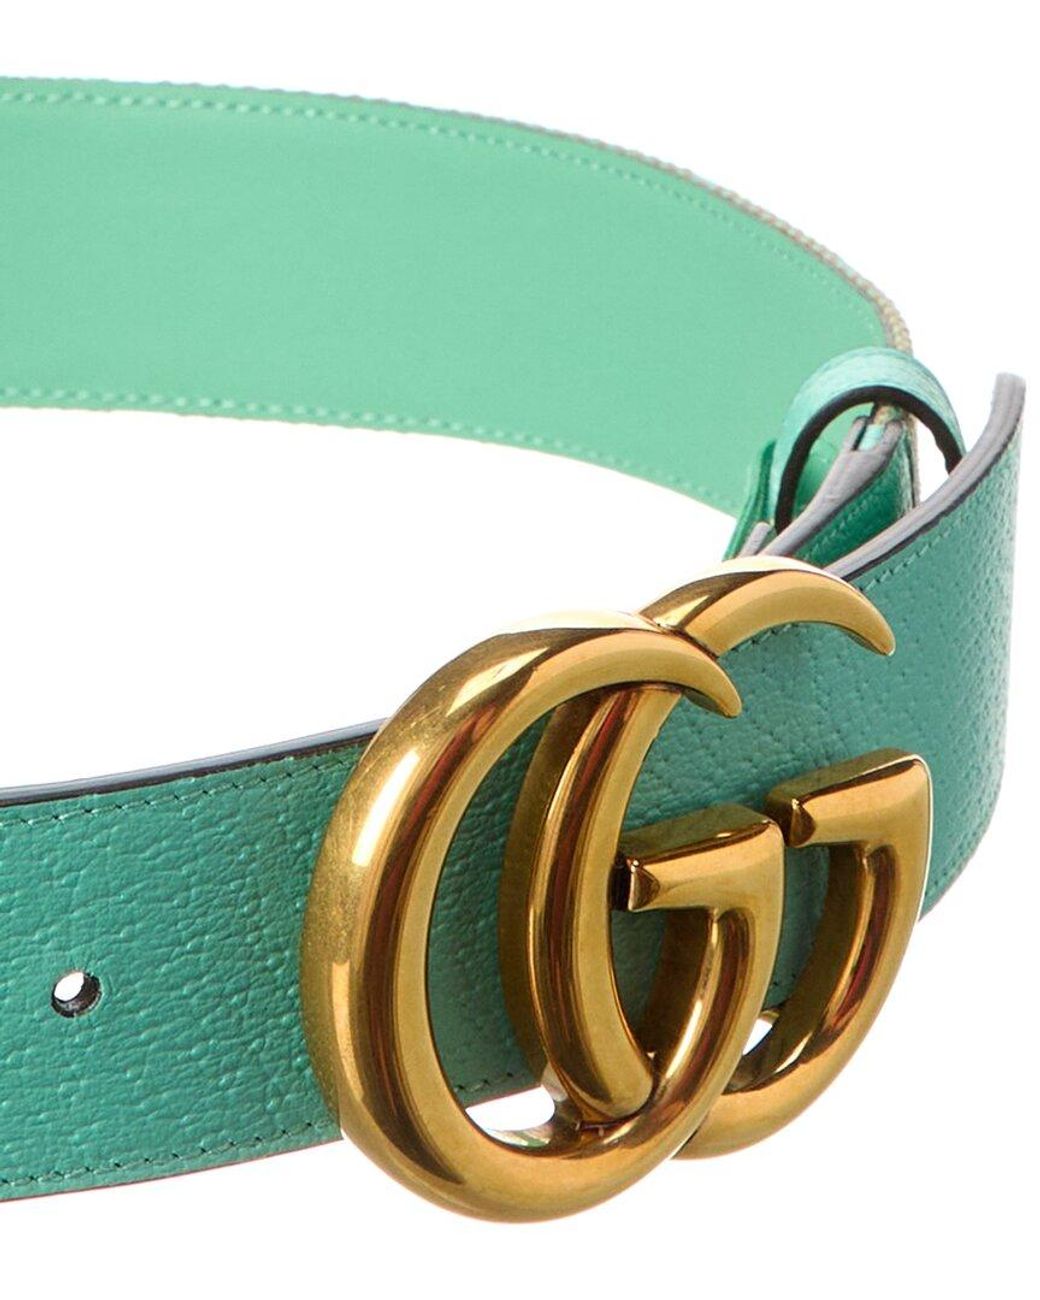 Gucci GG Marmont Belt - Size 65/26 - One Savvy Design Luxury